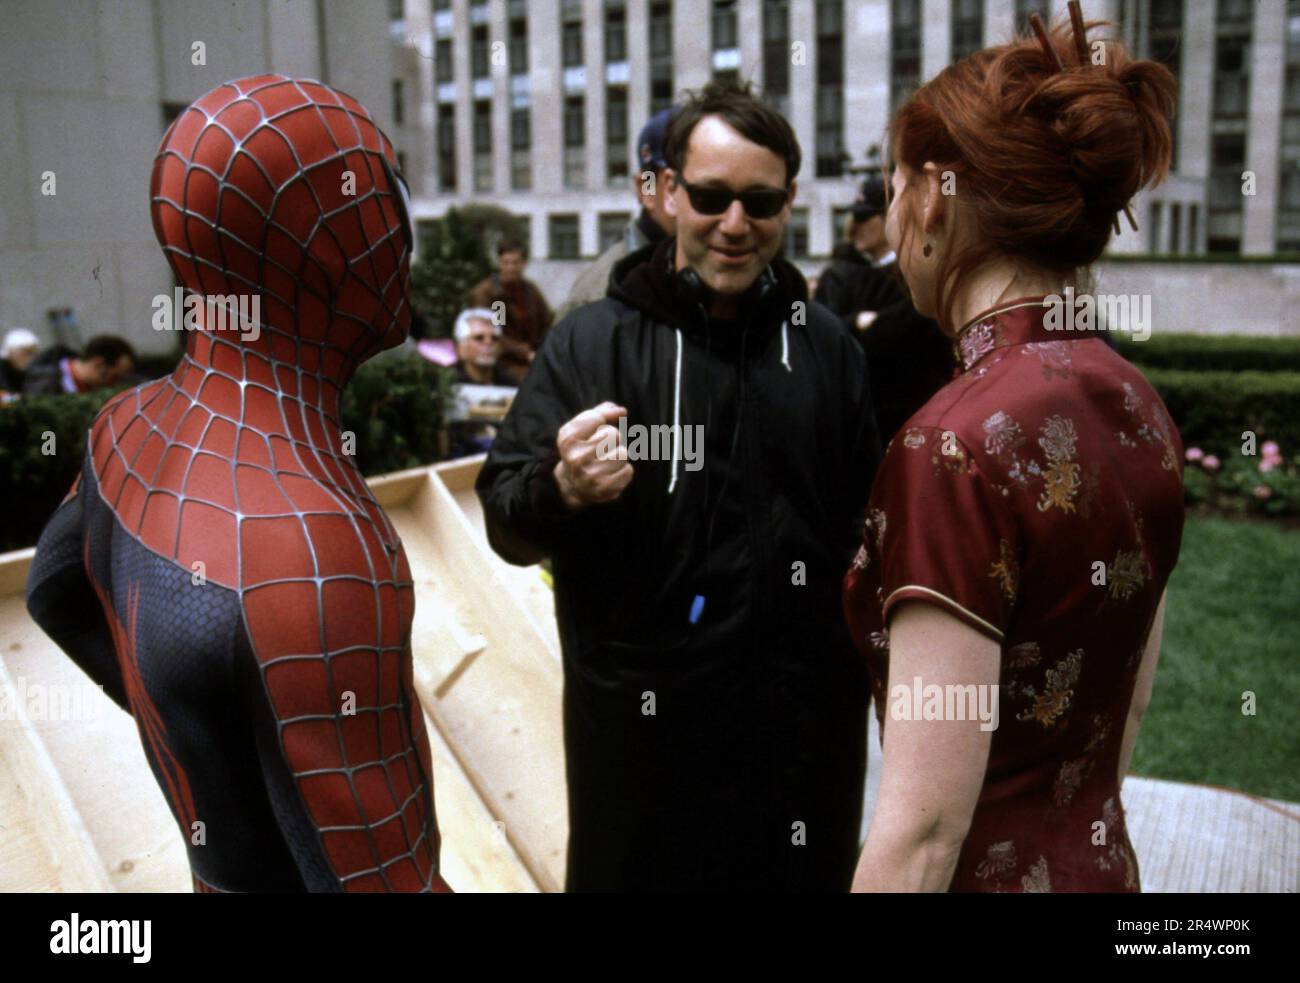 Spider-Man Anniversary: Behind-the-Scenes With Sam Raimi, Willem Dafoe